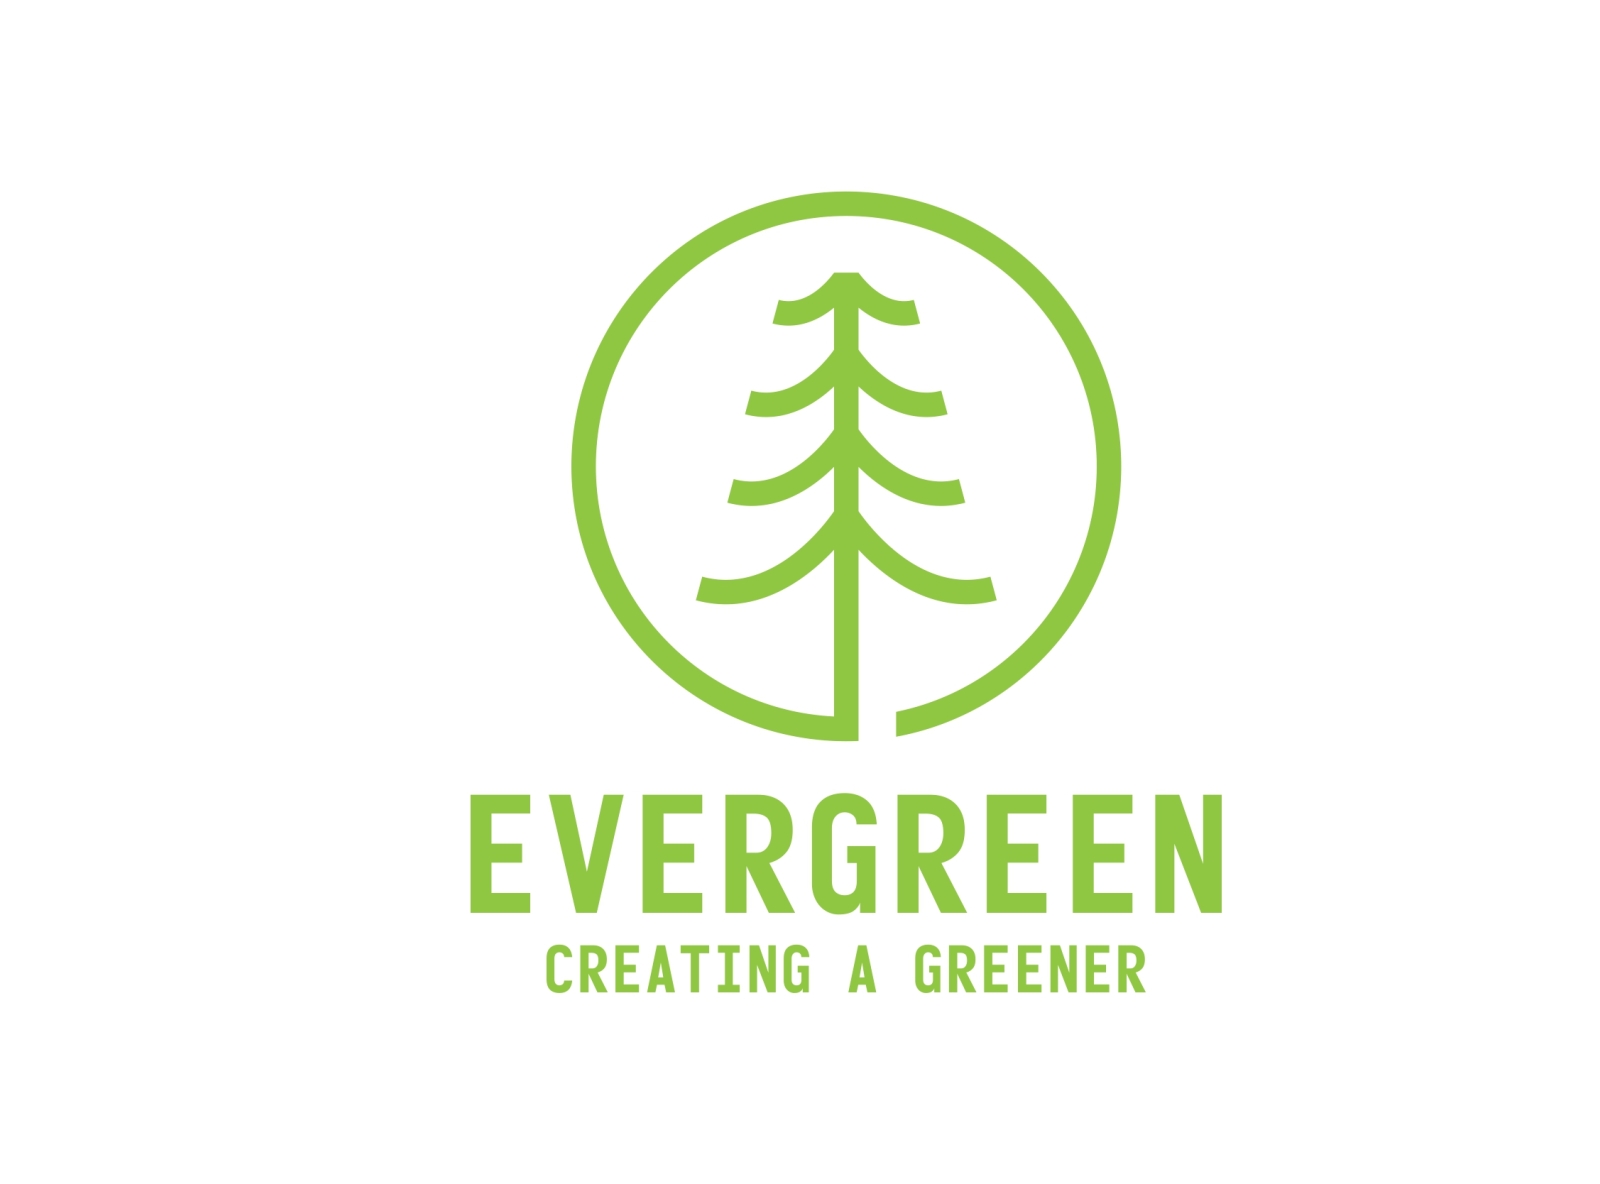 Evergreen Logo Designs Modern Simple Stock Vector - Illustration of  landscape, symbol: 187545965